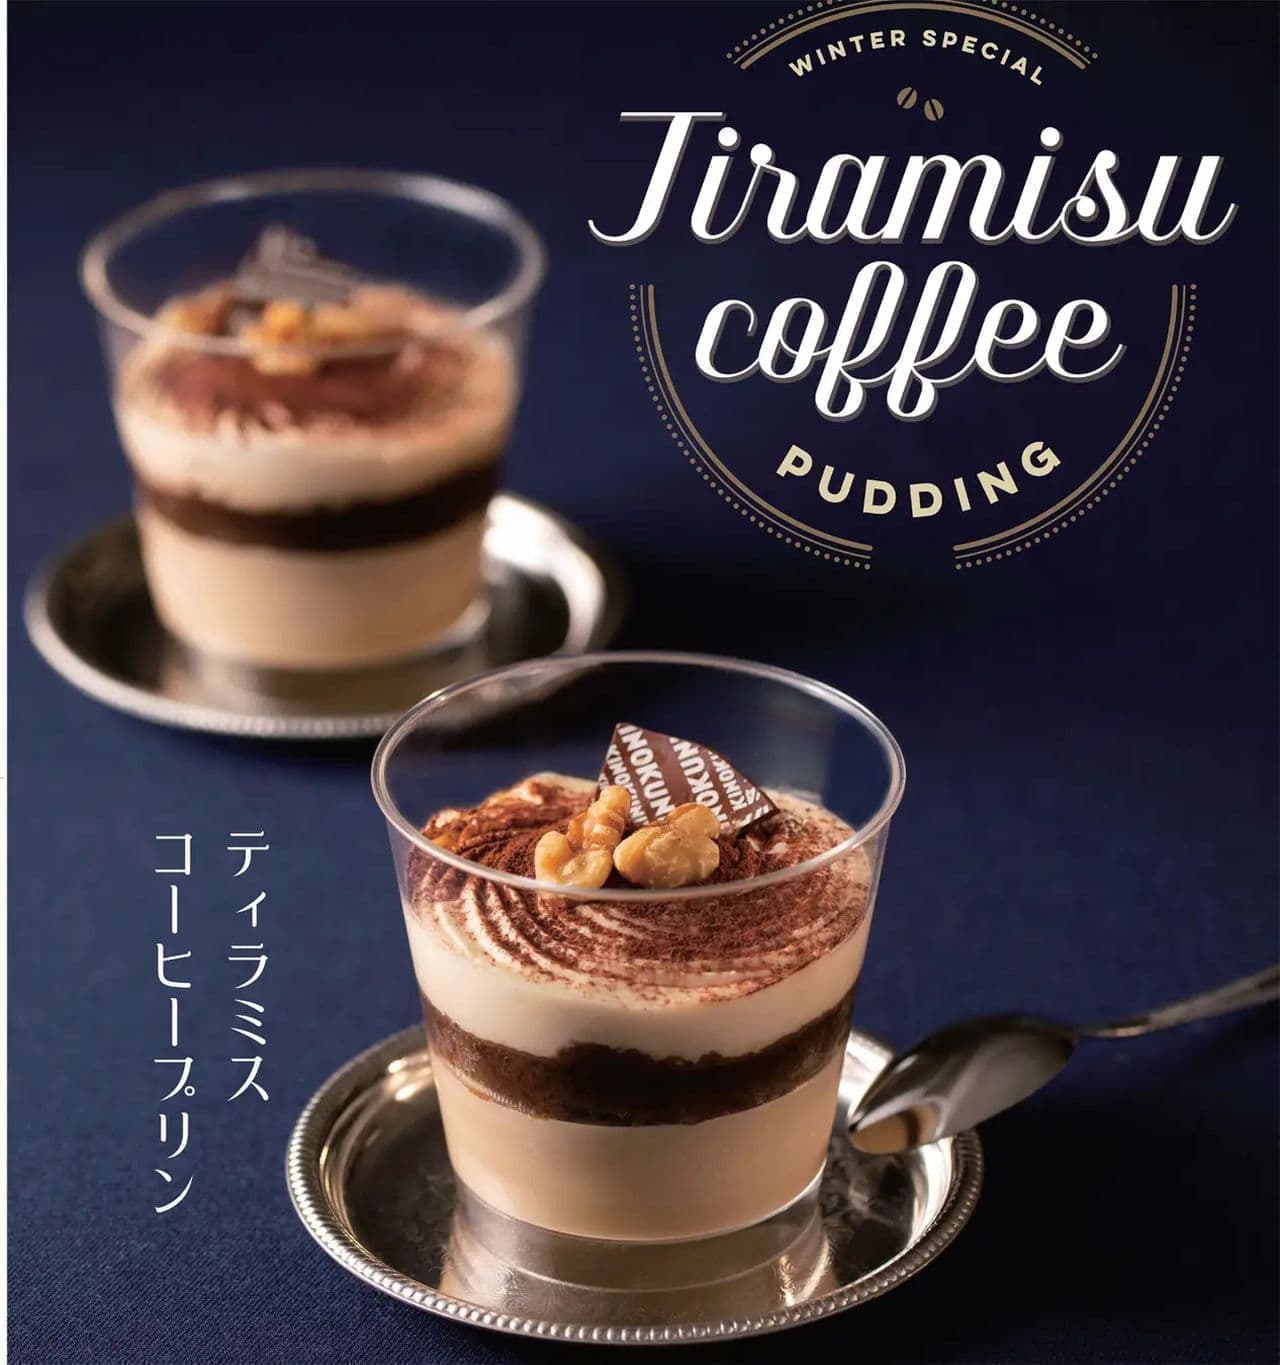 KINOKUNIYA "Tiramisu Coffee Pudding